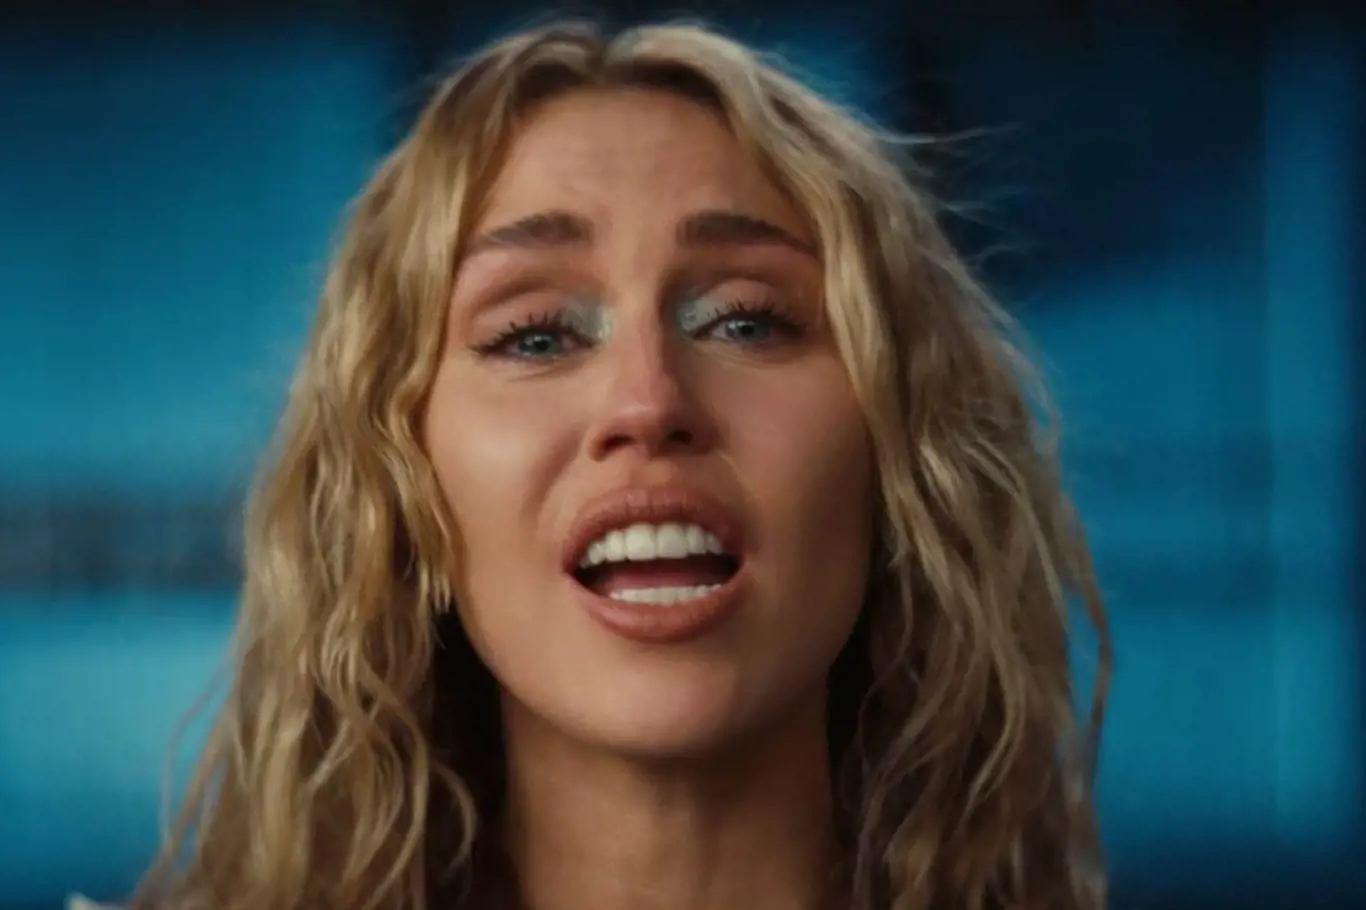 Miley Cyrus v rozhovoru o otci plakala. 